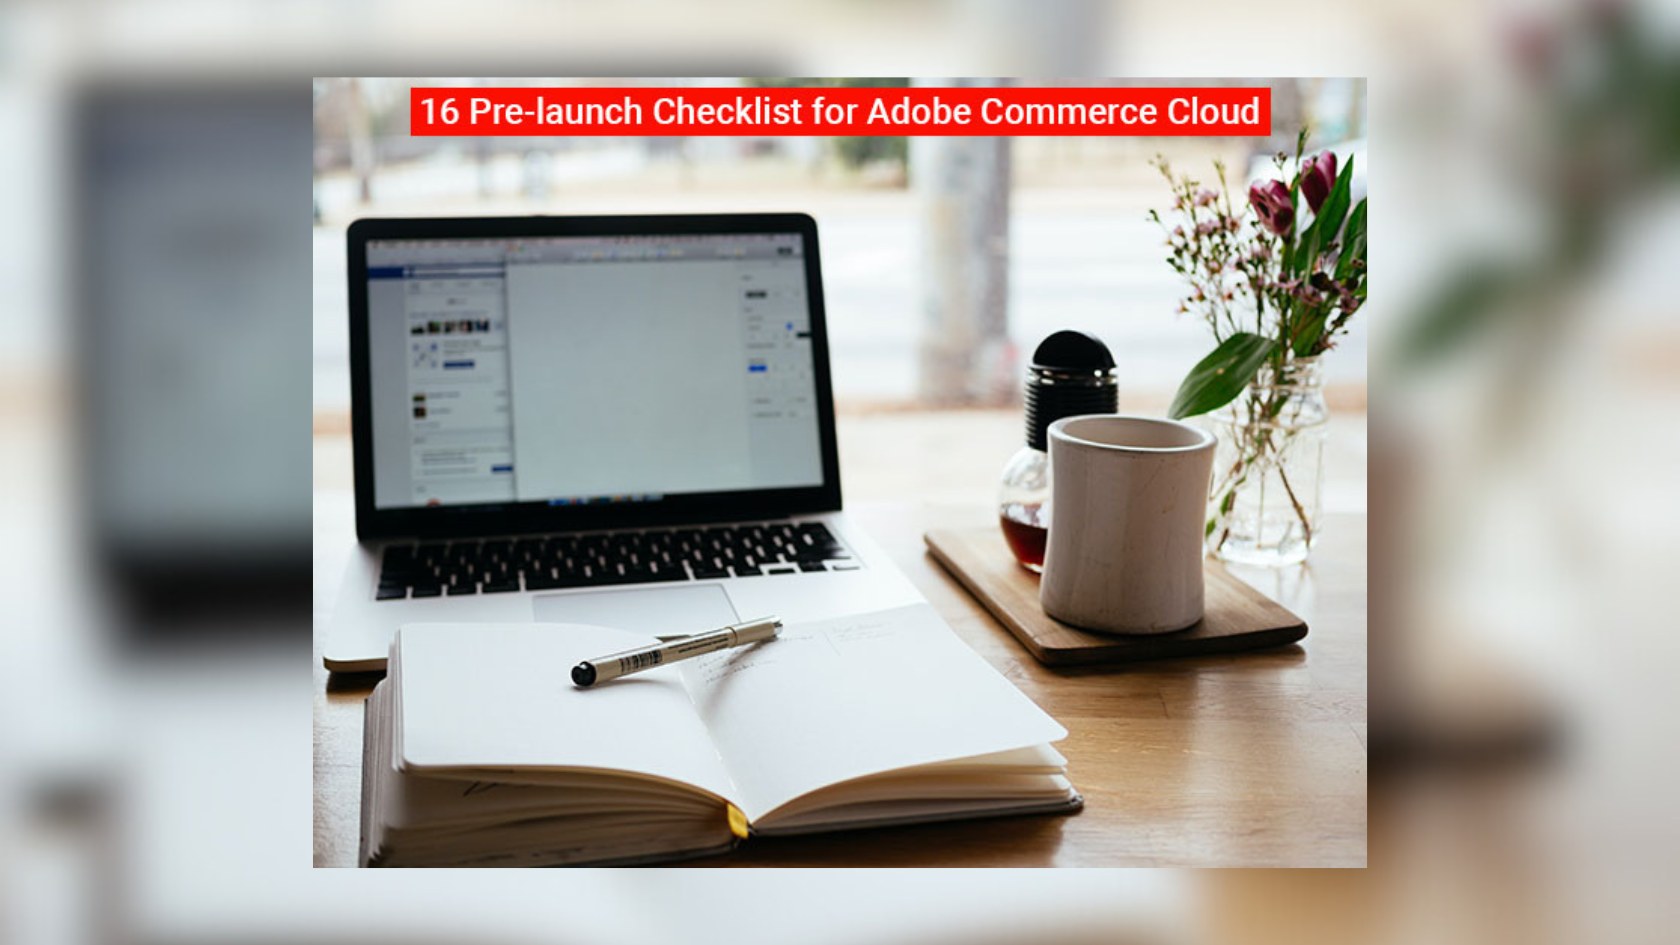 Adobe Commerce Cloud Checklist